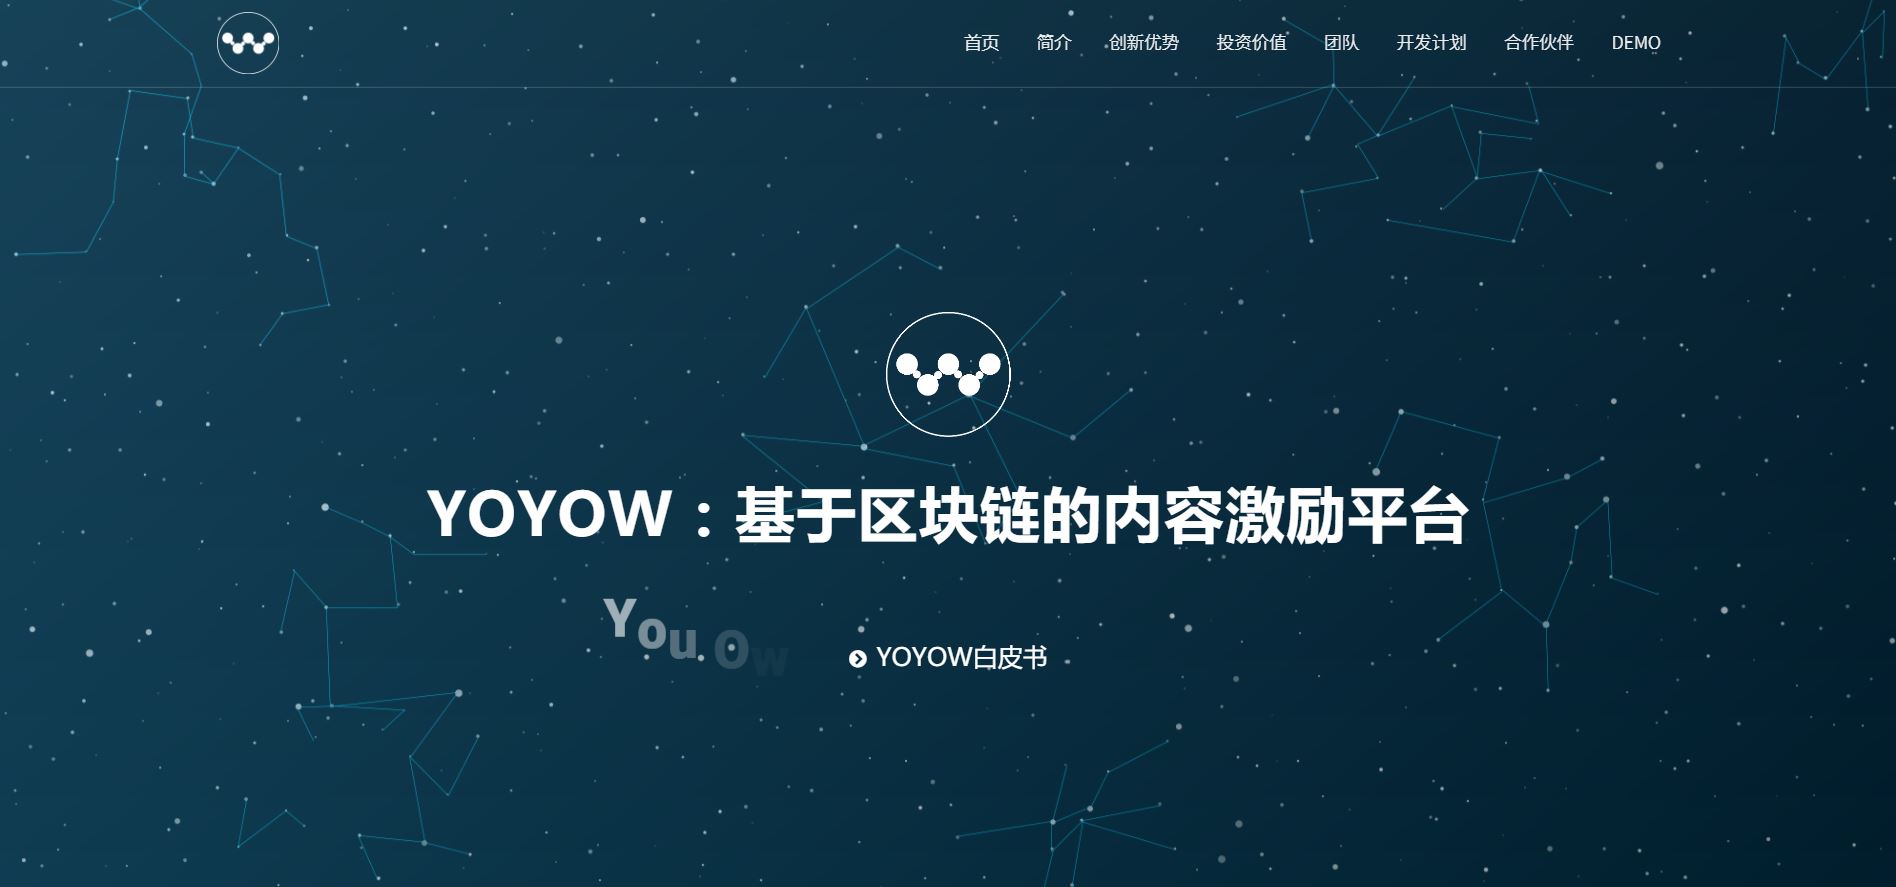 yoyow_homepage.JPG